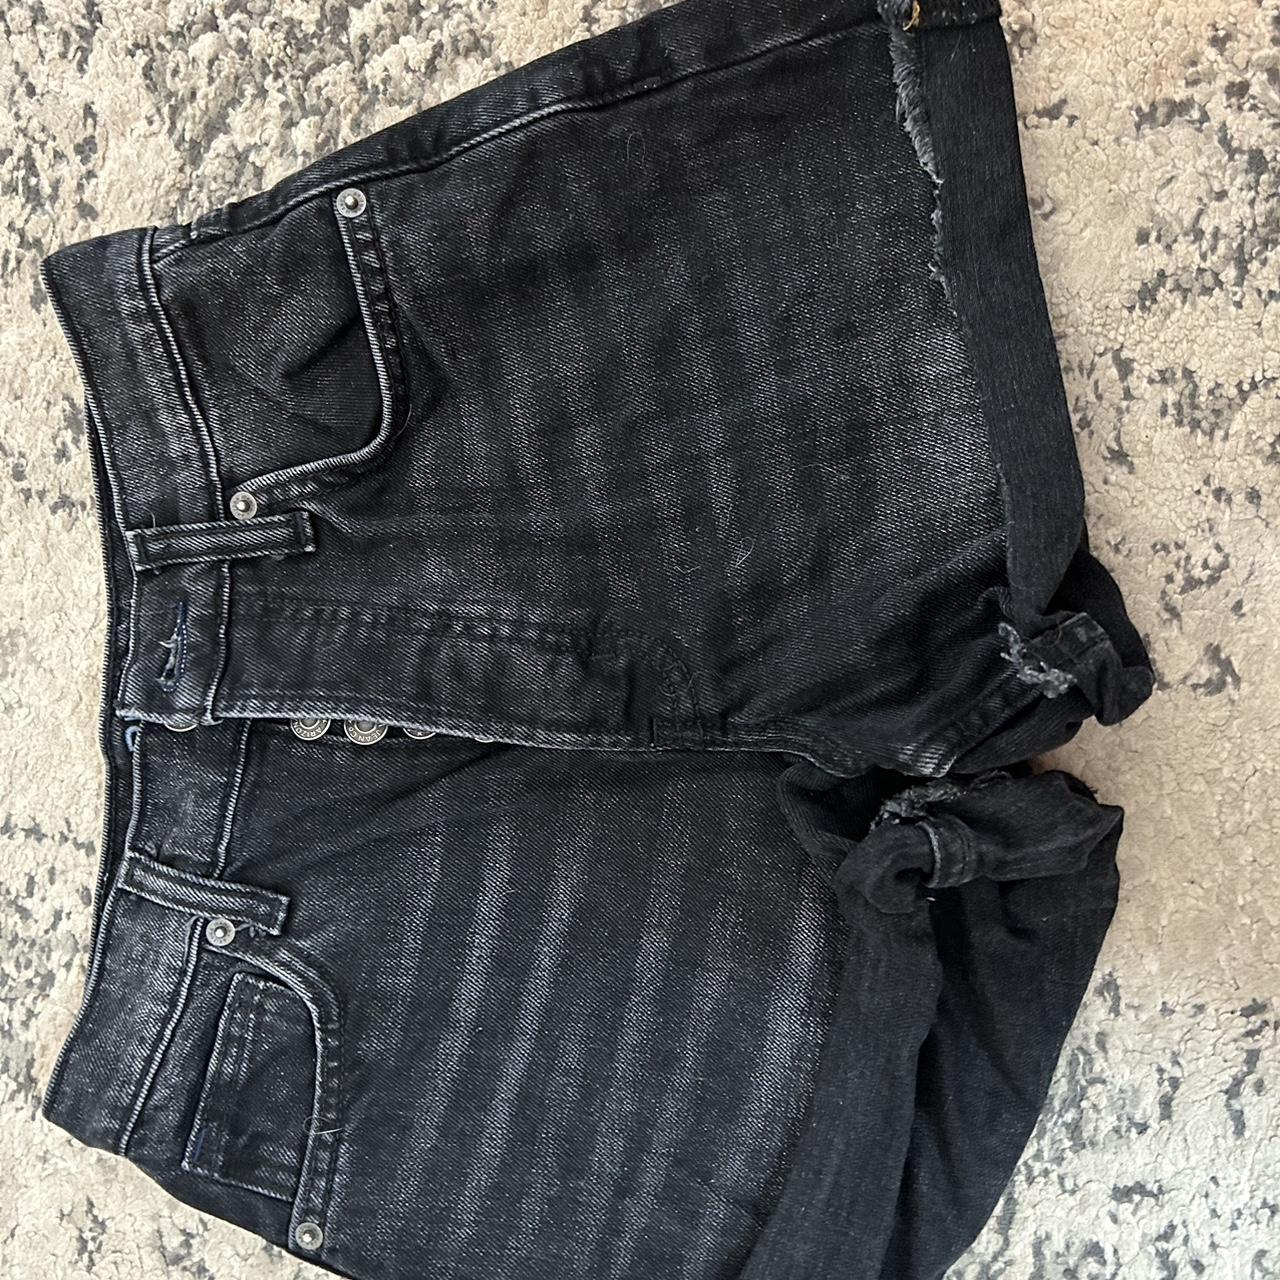 Black denim high $10 Depop 1. shorts - OBO size rise